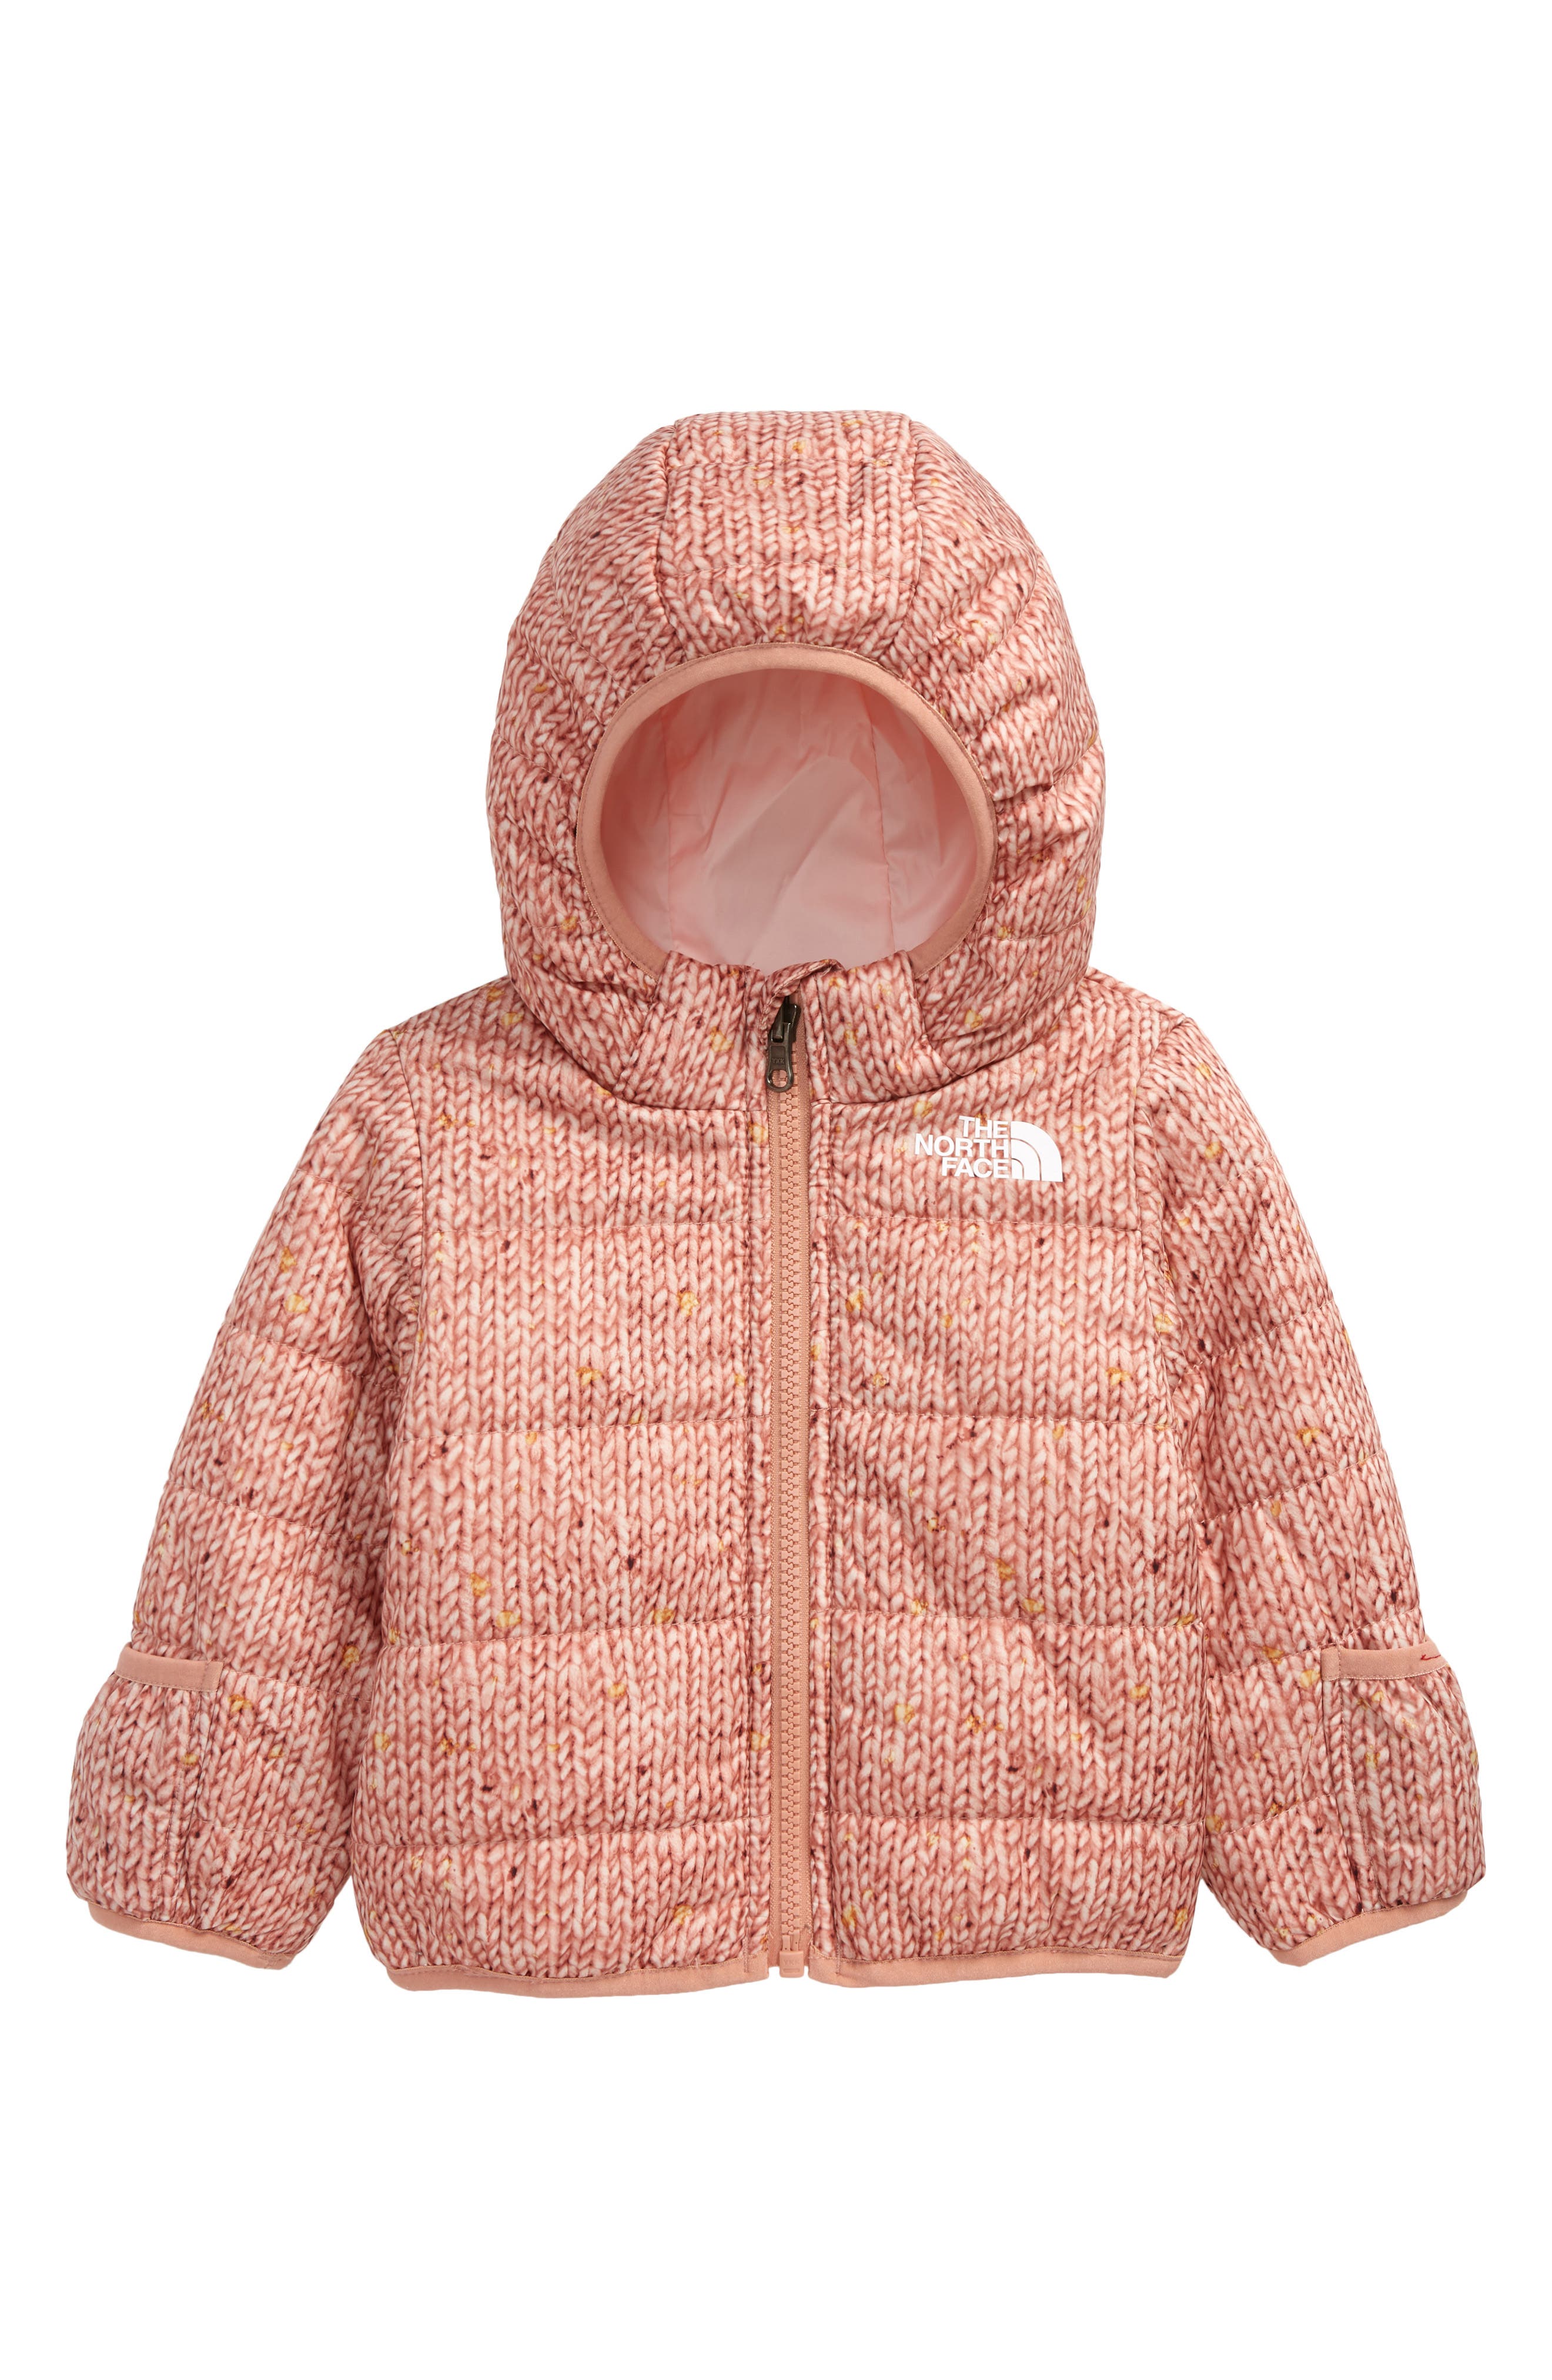 baby jacket price